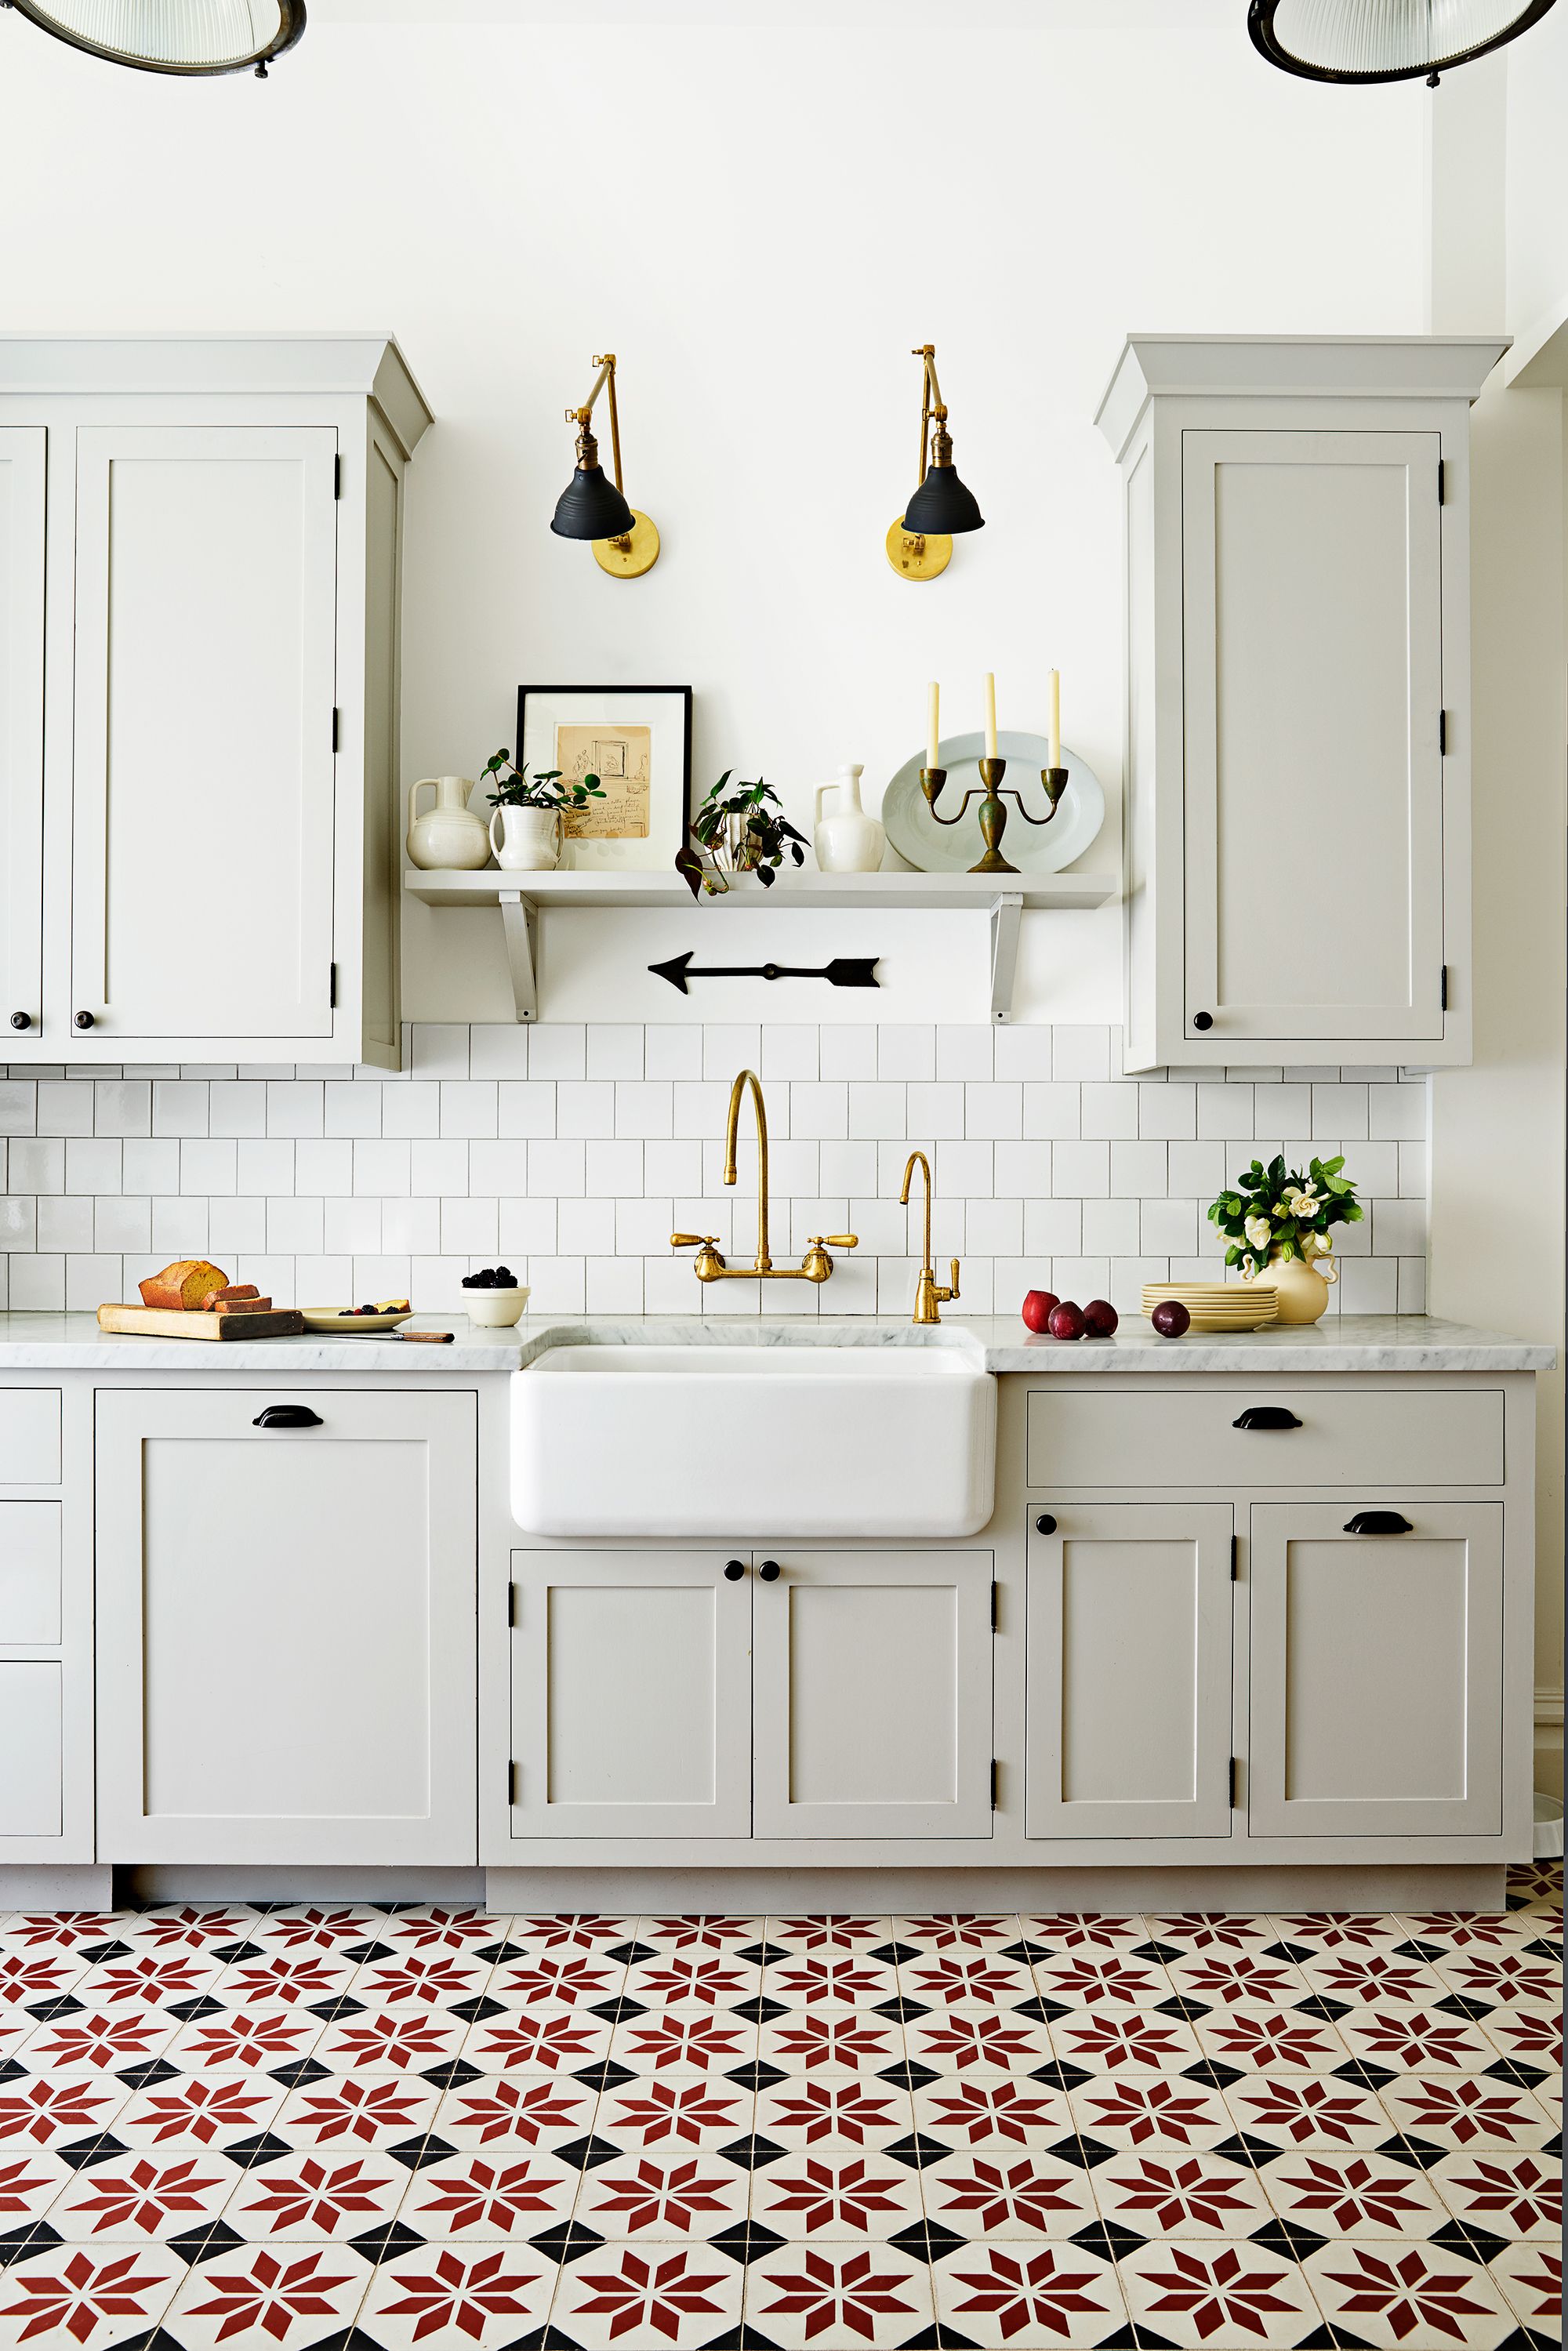 18 Modern Floor Tile Designs The Best, Floor Tile Patterns Kitchen